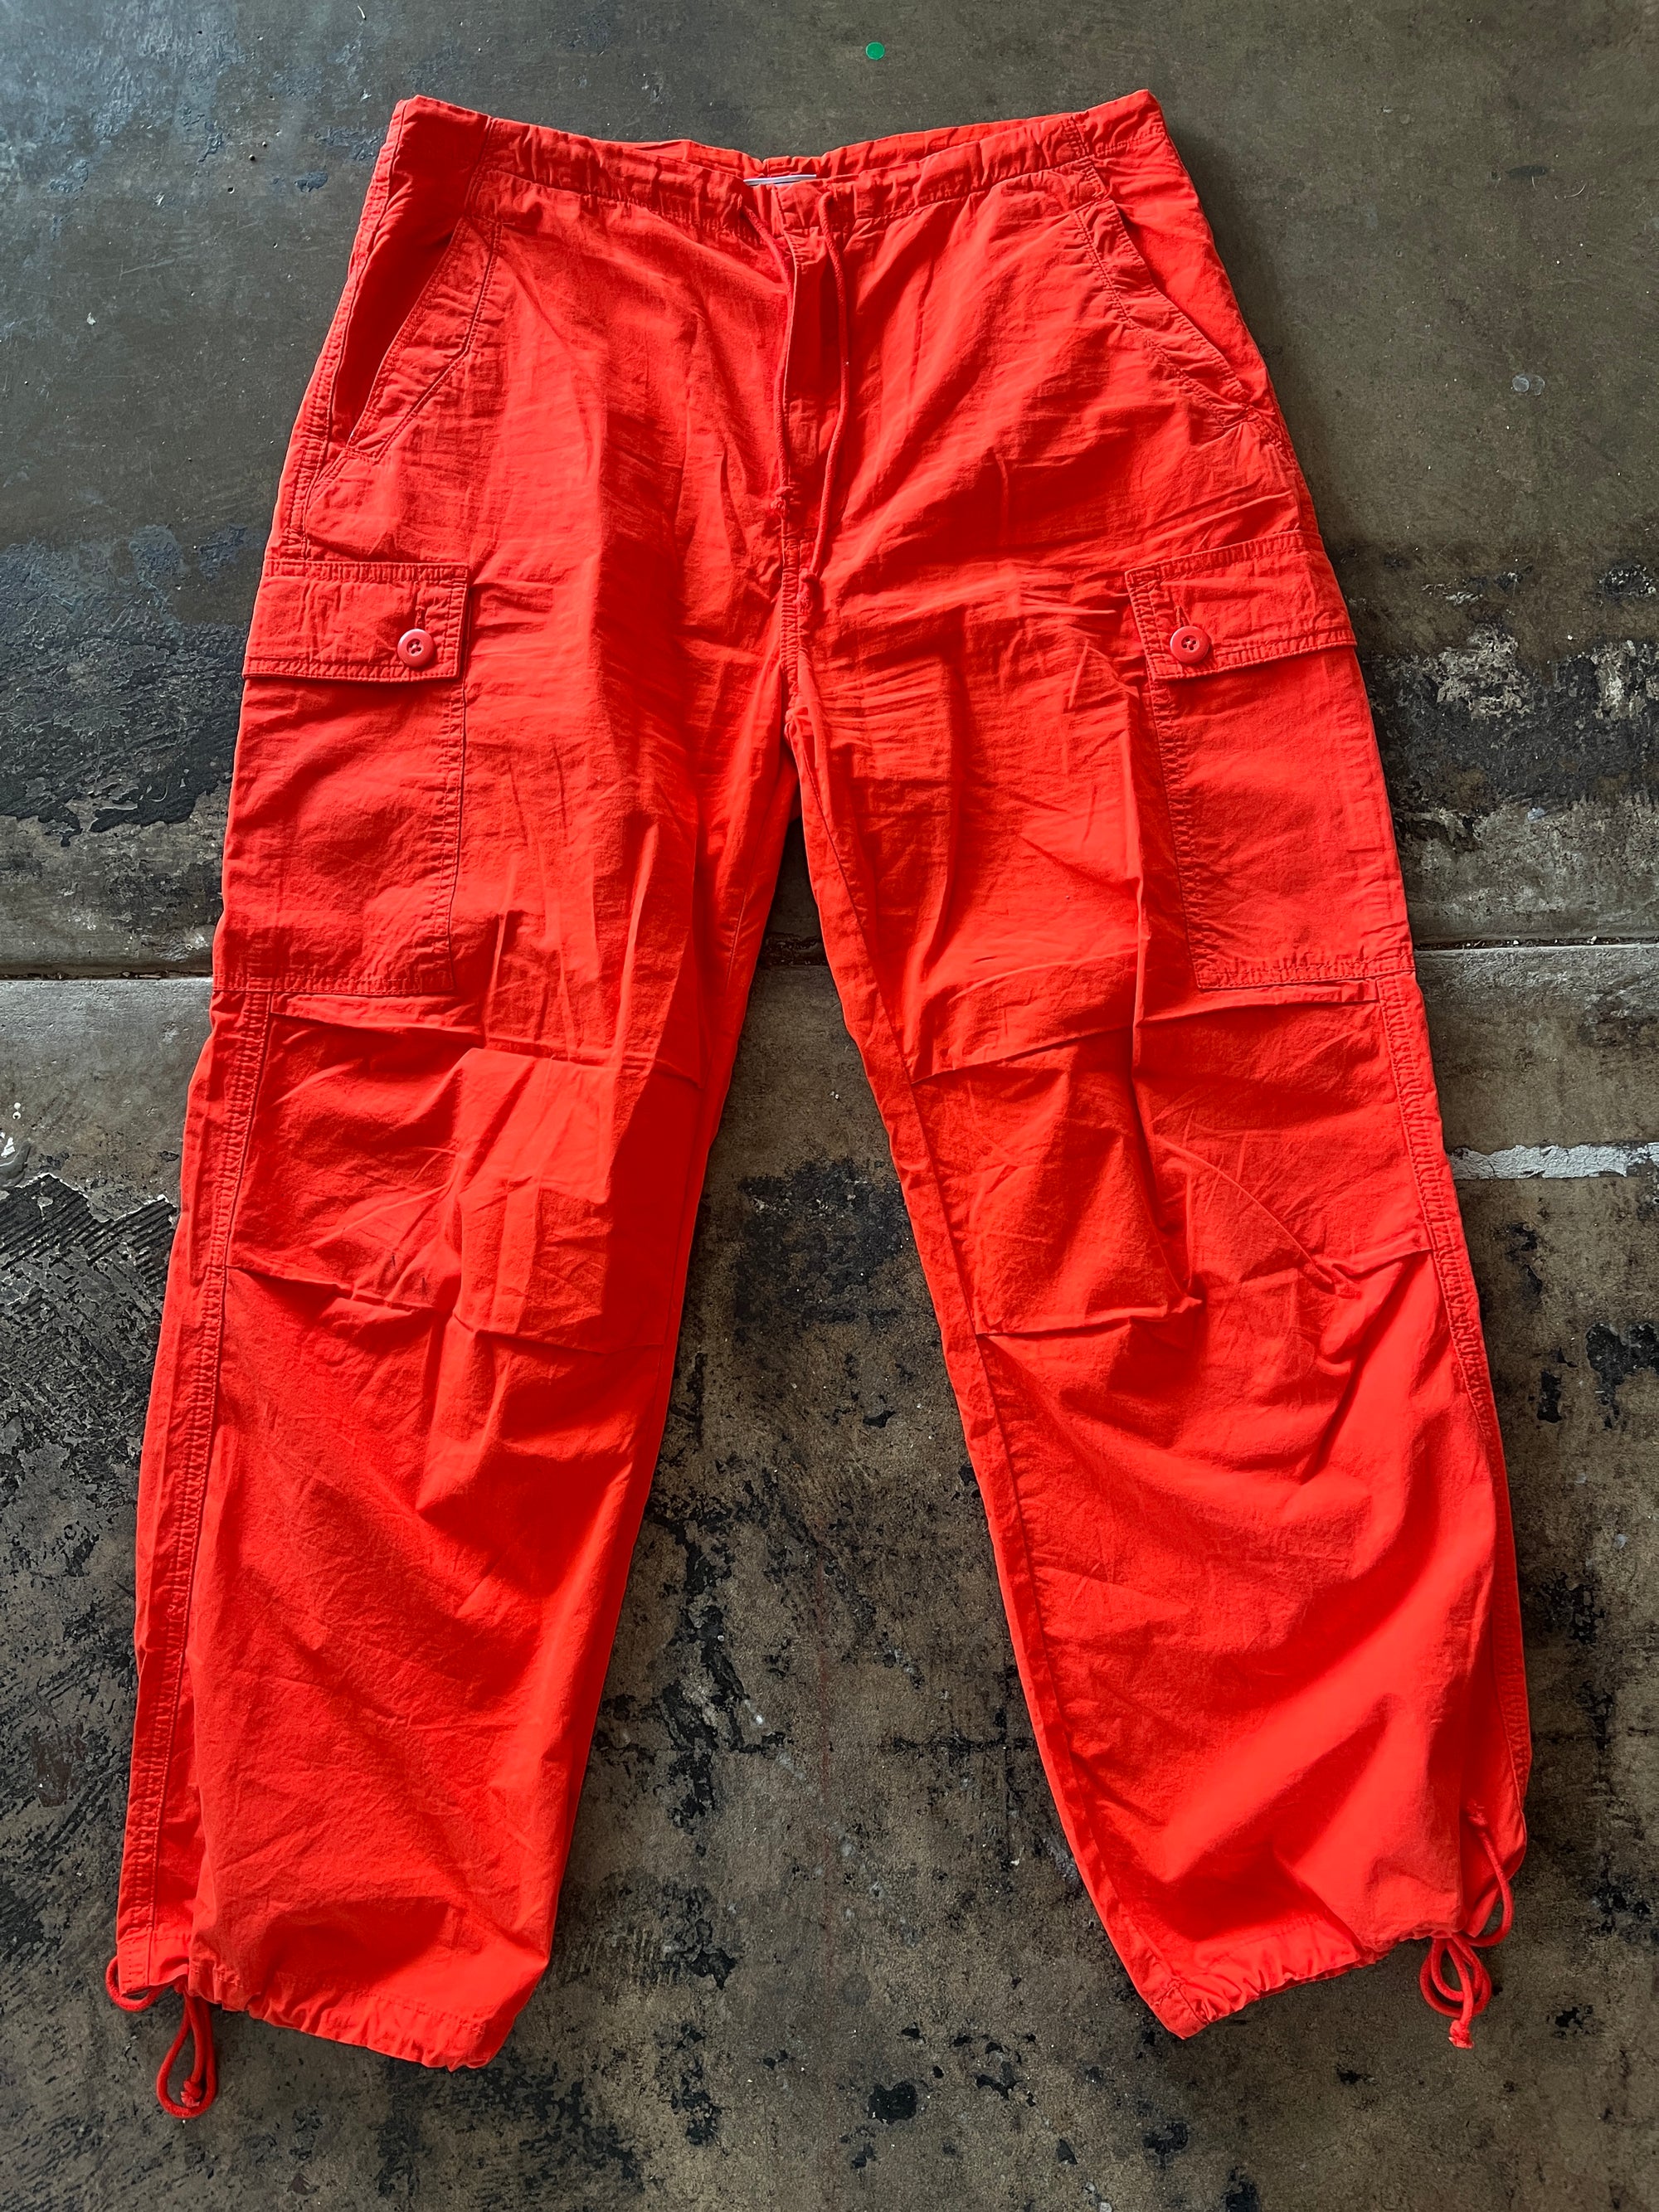 Outdoor Voices Red/Orange Cargo Pants